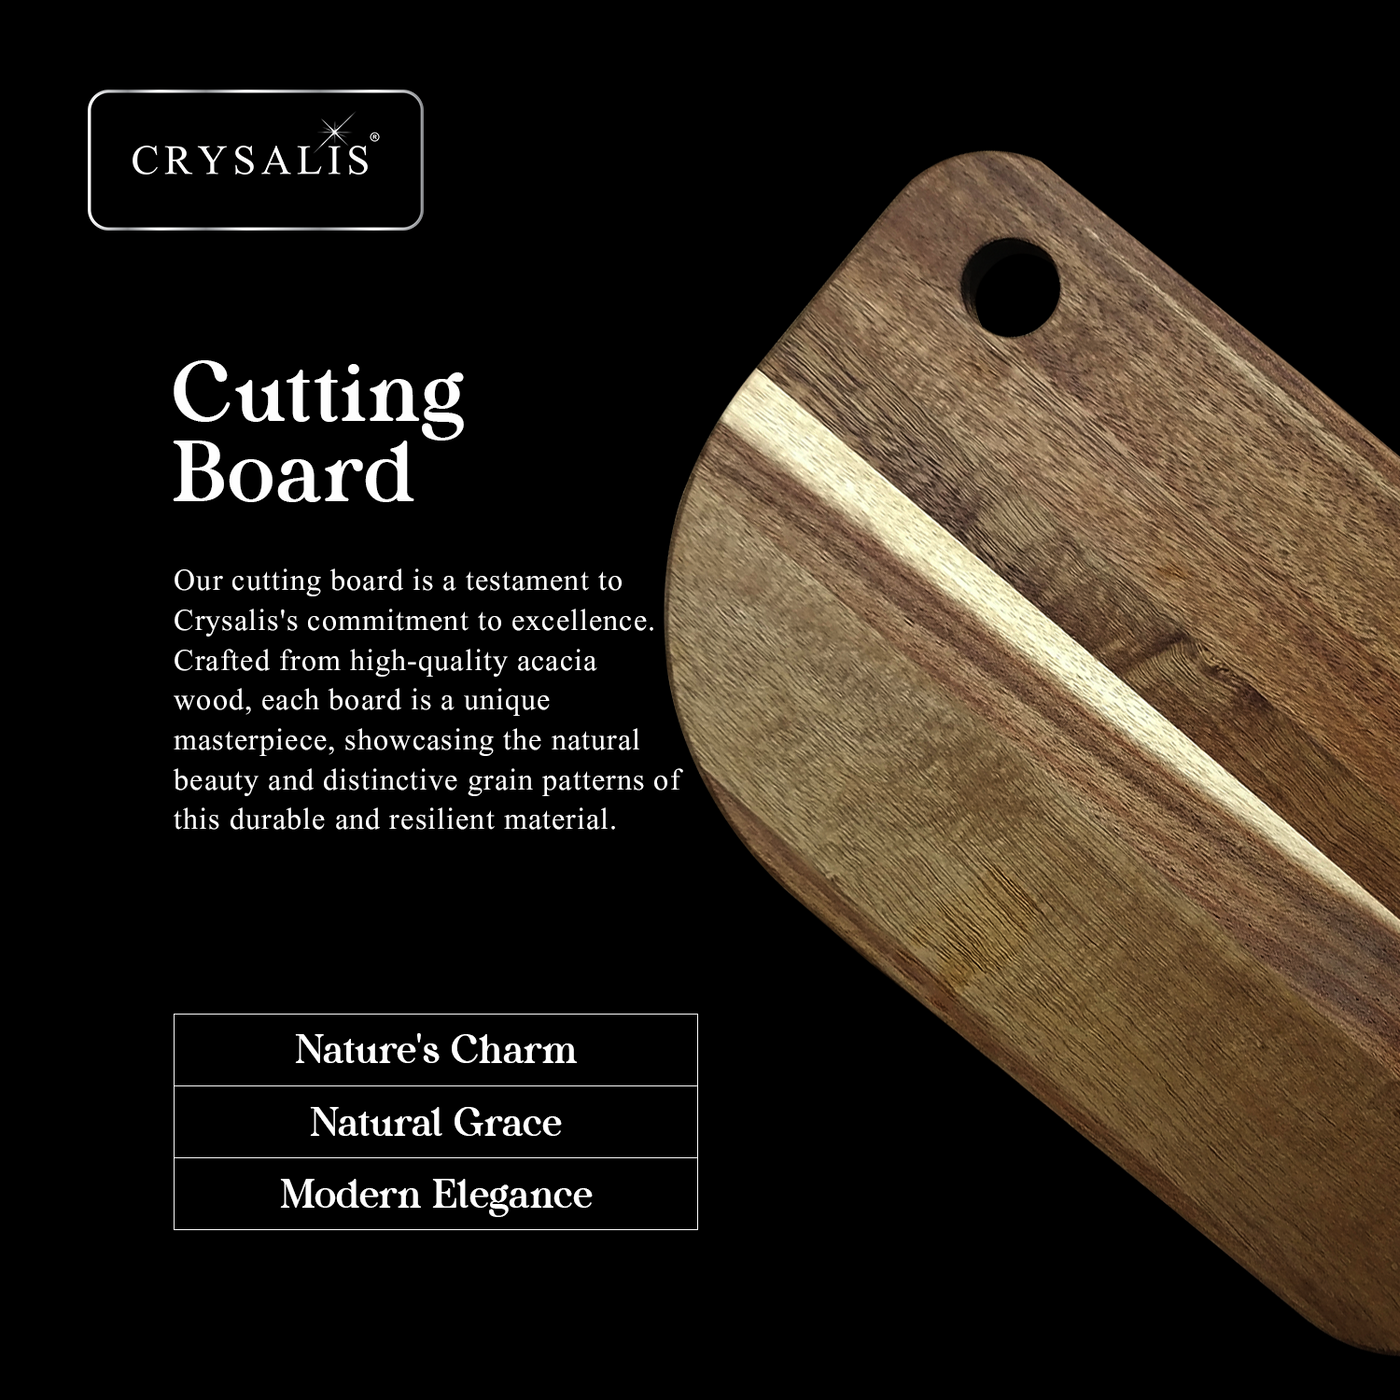 CRYSALIS PREMIUM Cutting Board Small/Large Wooden Chopping Board - Acacia Wood